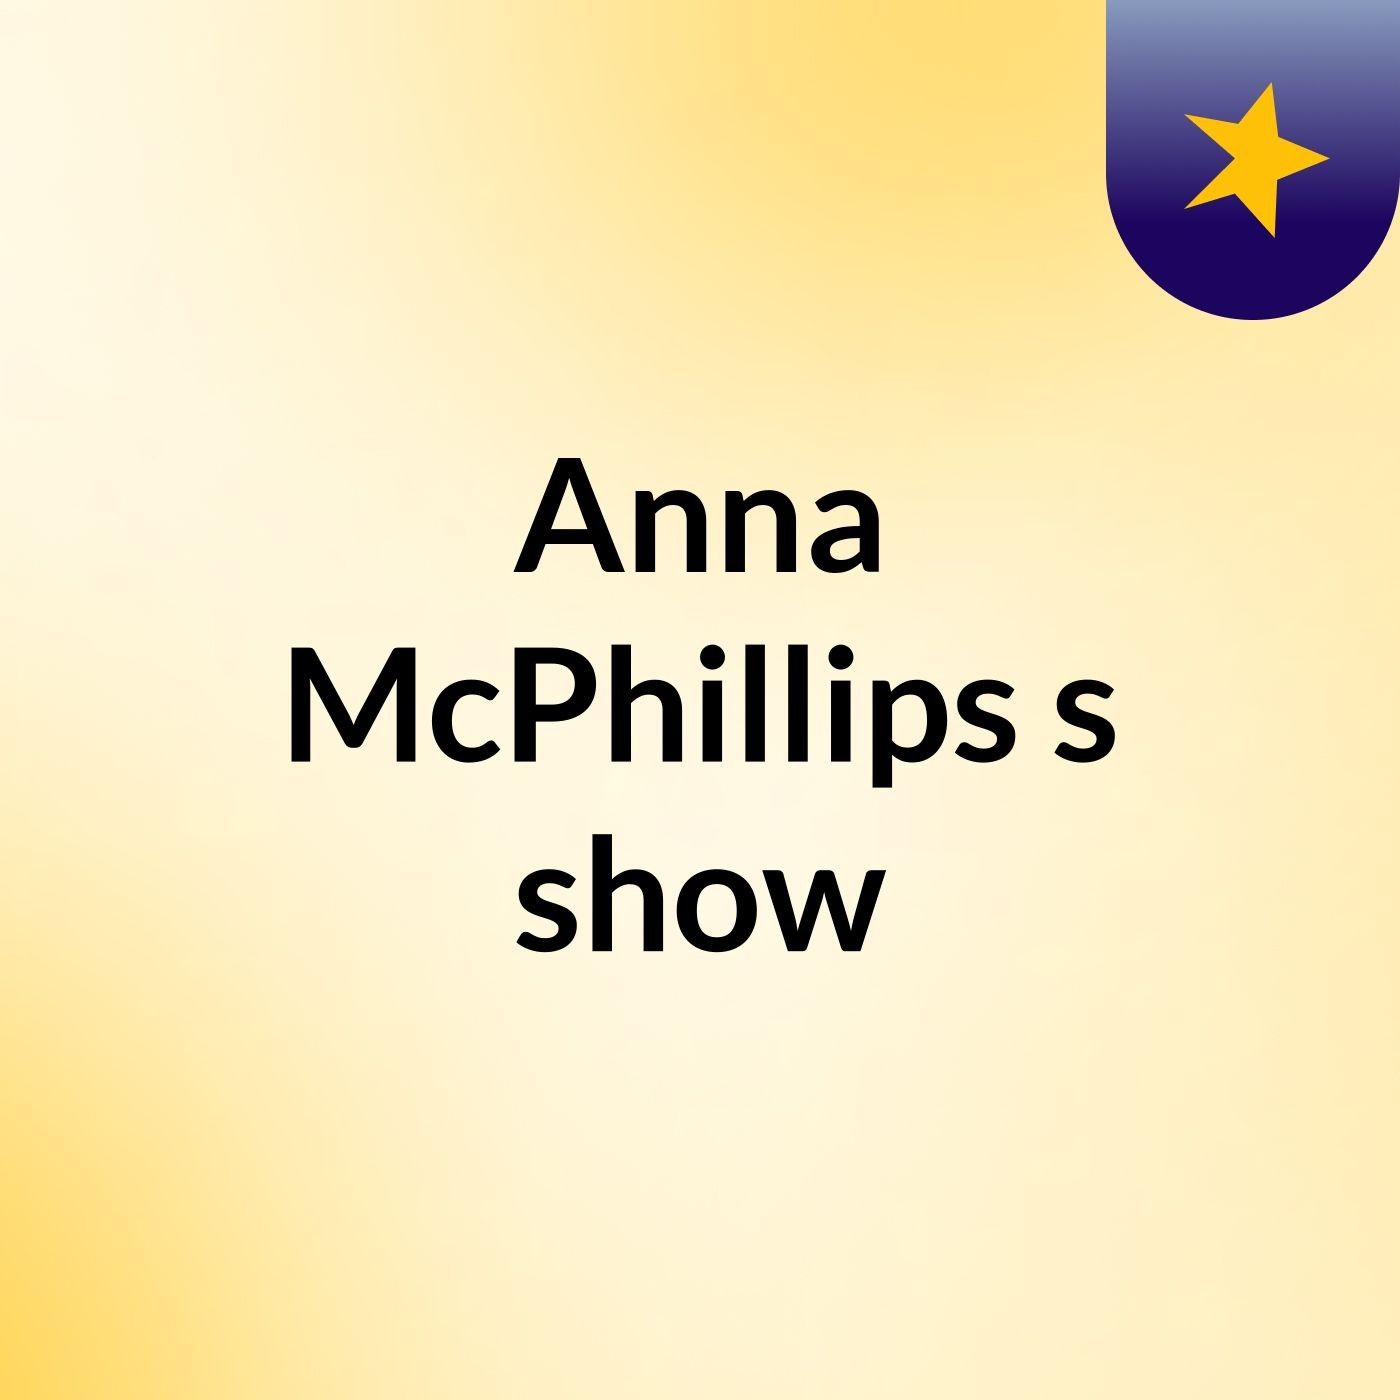 Anna McPhillips's show